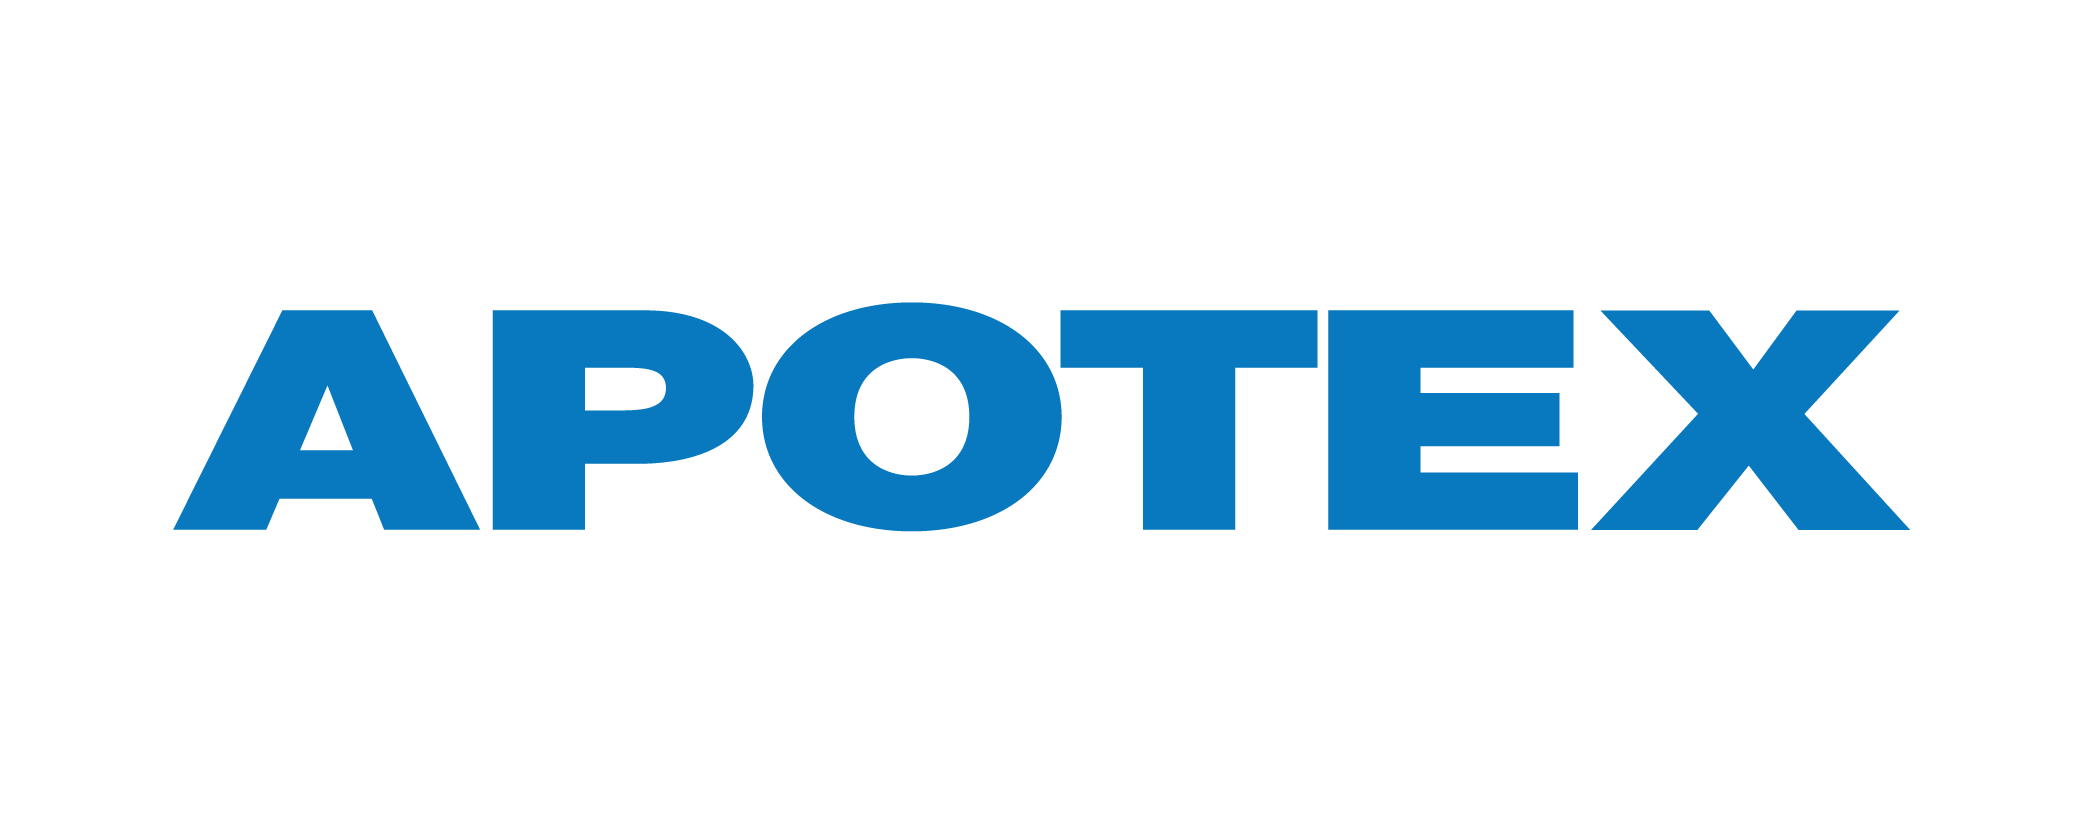 Apotex_Logo_FINAL.png